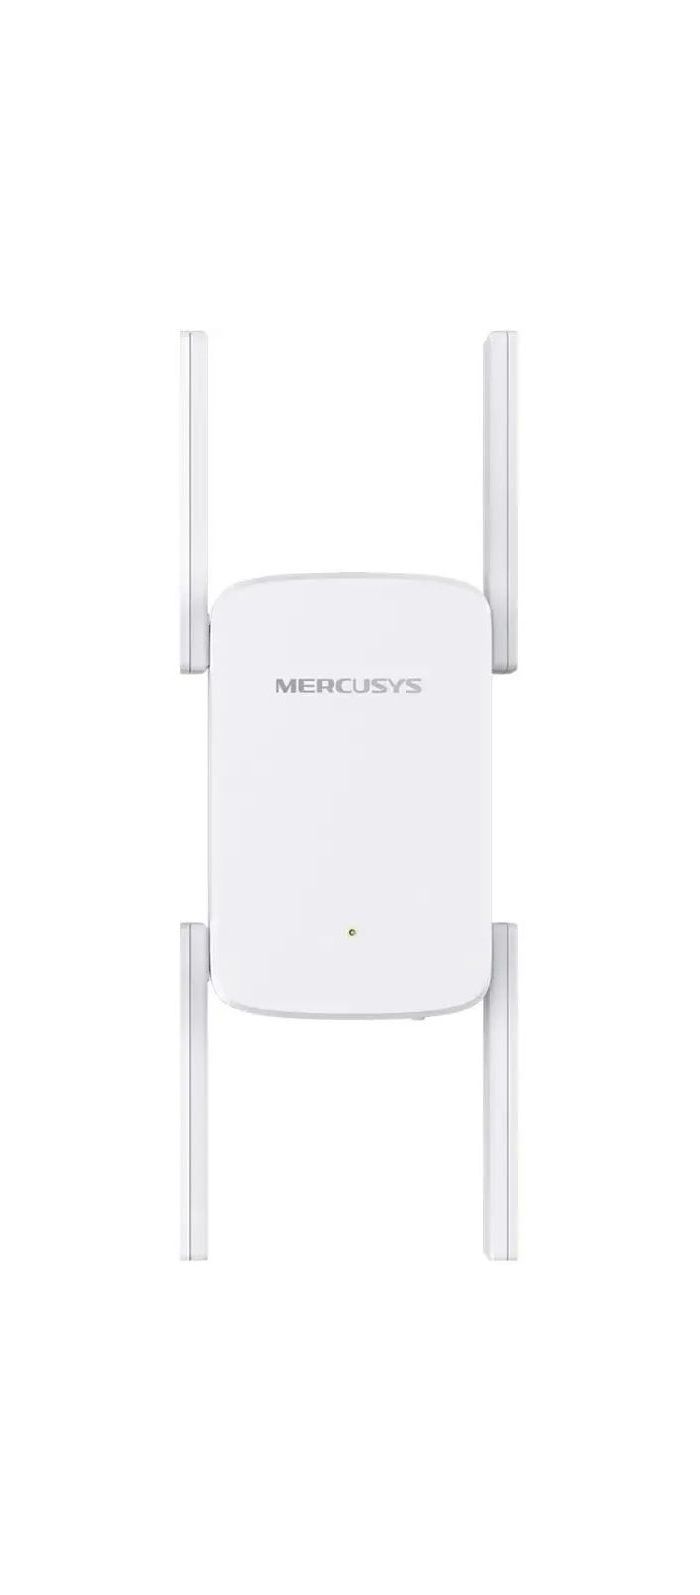 Усилитель Wi-Fi сигнала Mercusys ME50G усилитель wi fi сигнала mercusys me70x